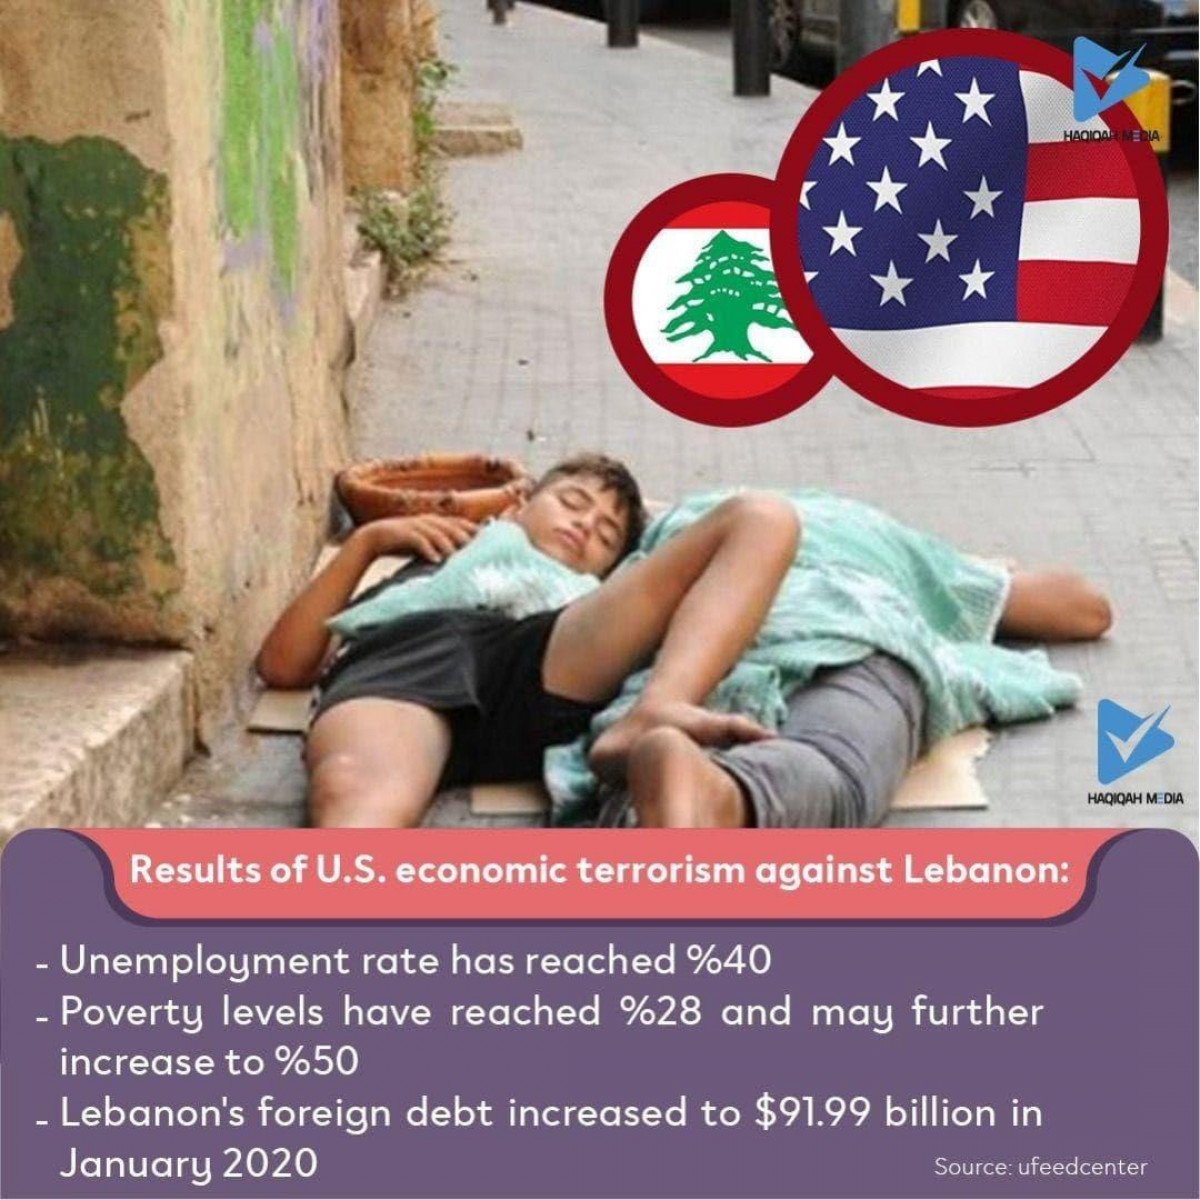 Results of U.S. economic terrorism against Lebanon